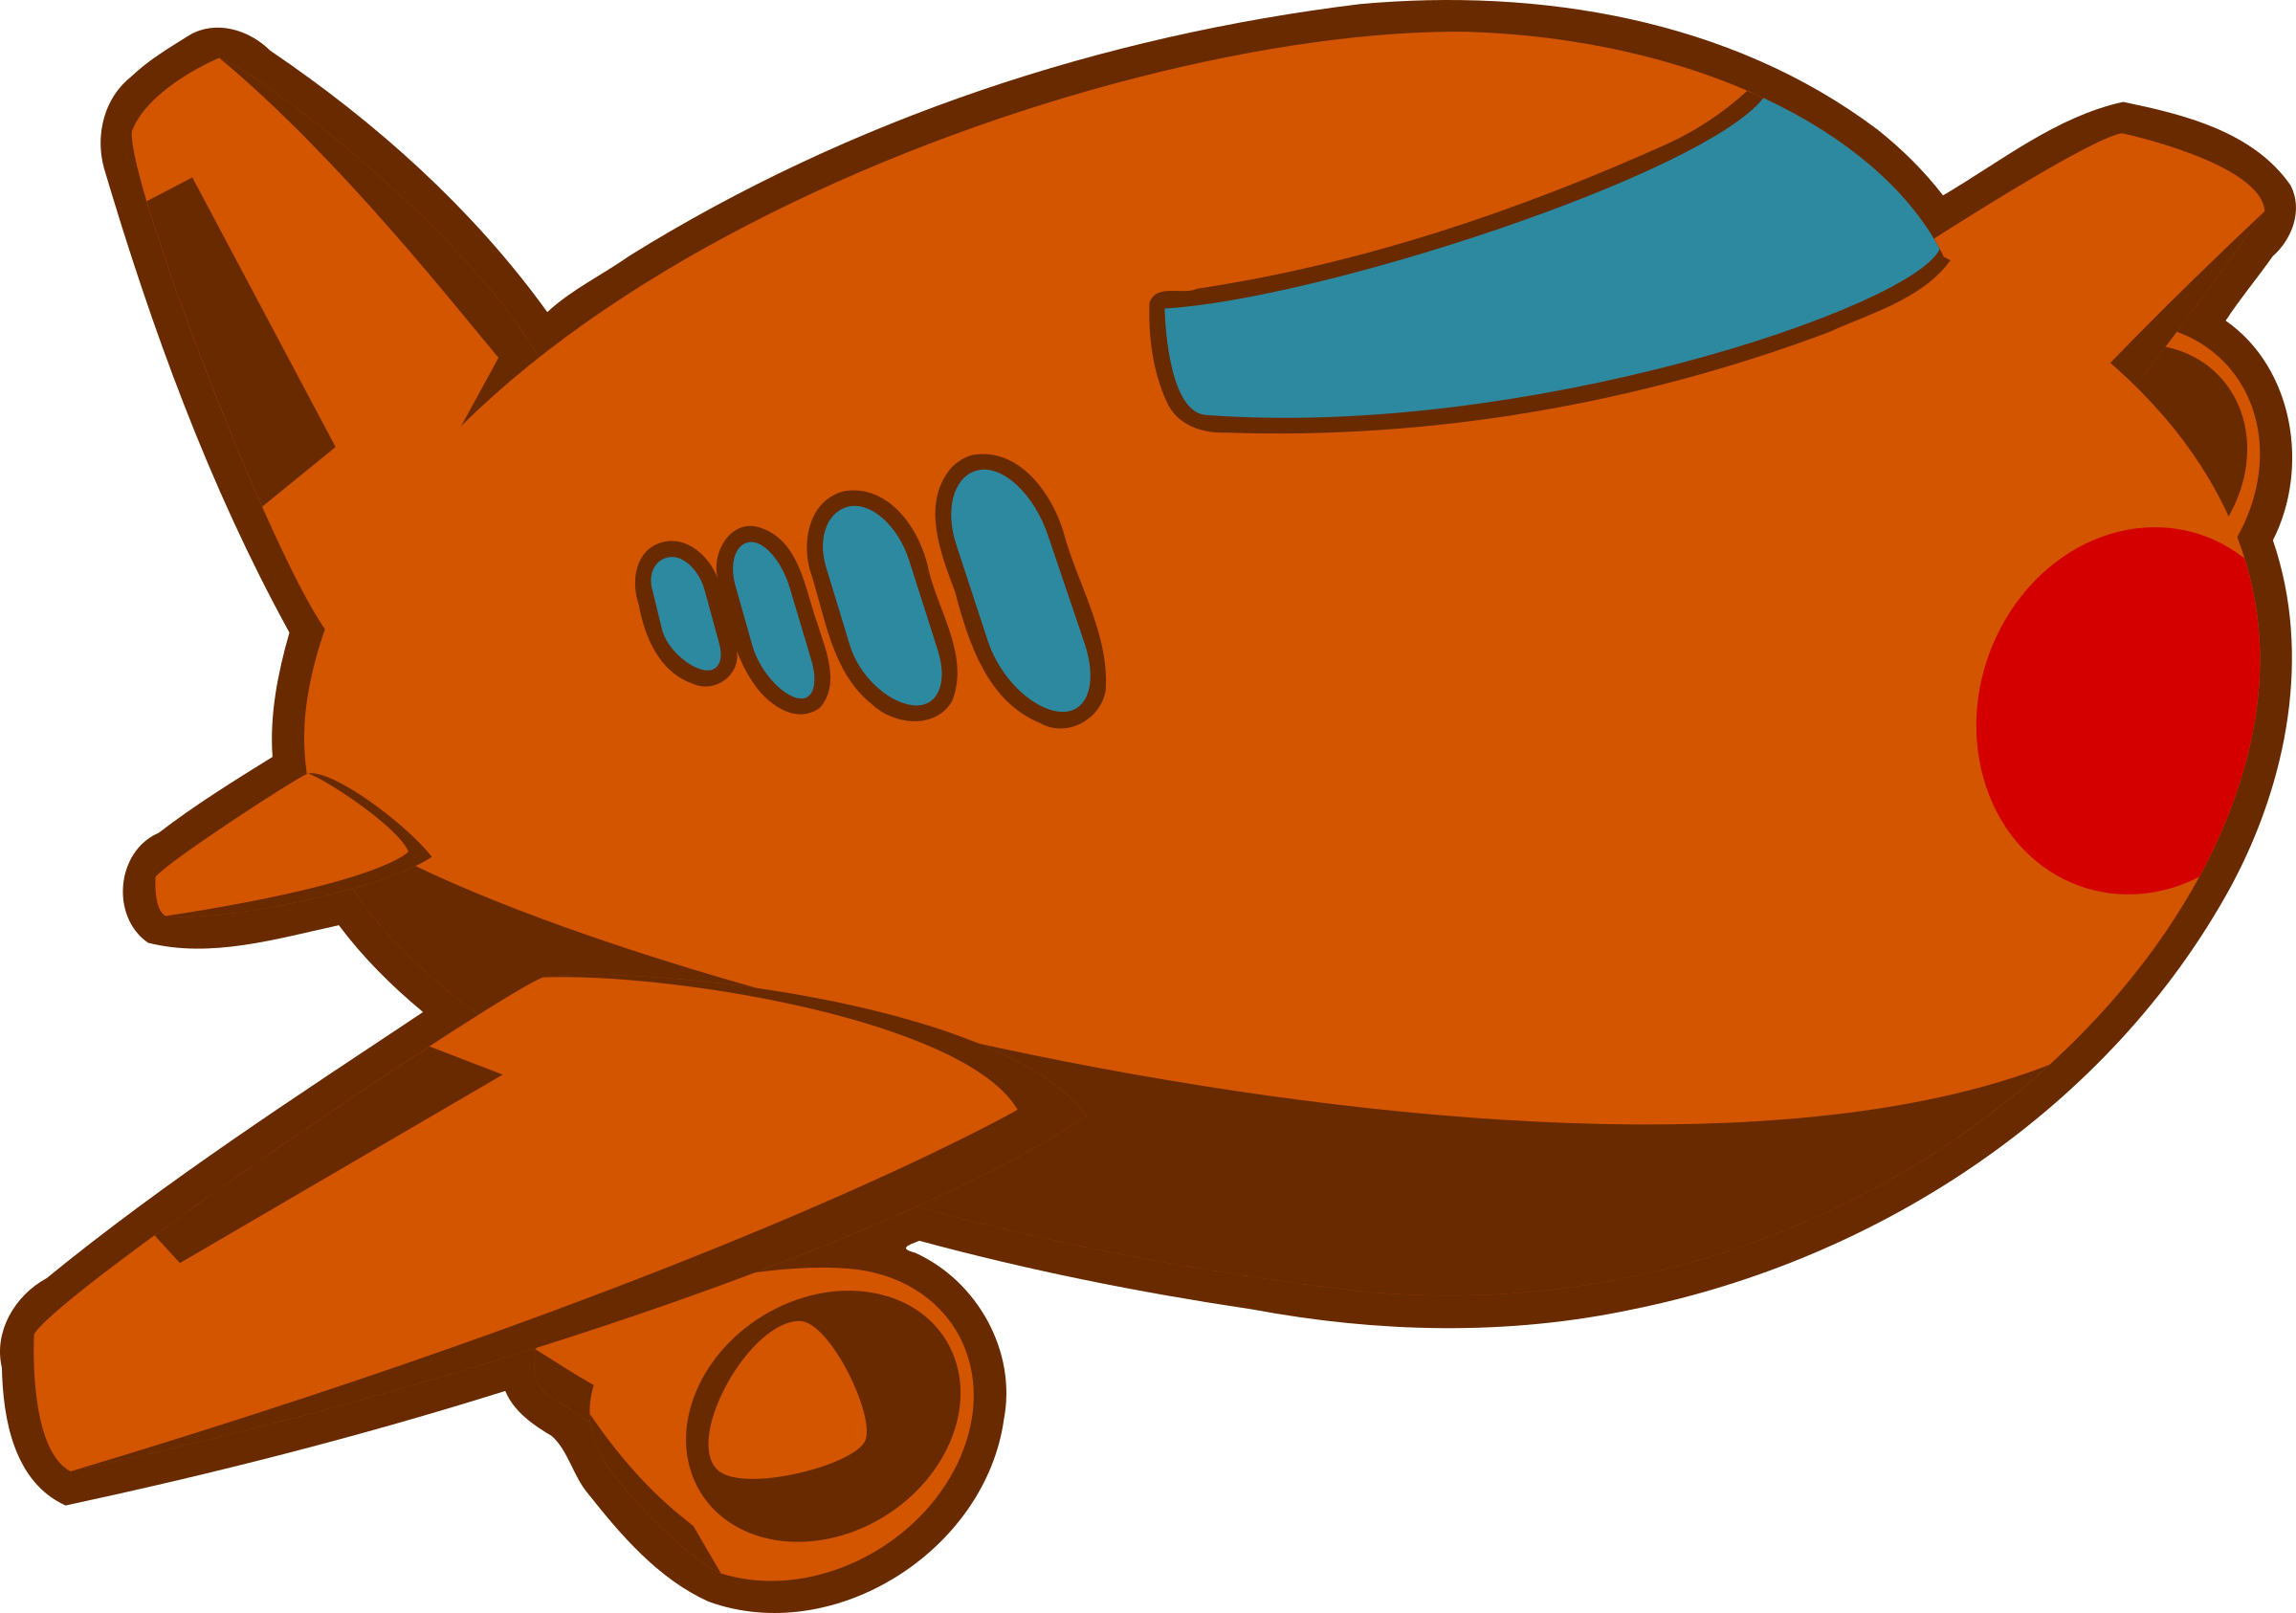 clipart plane orange